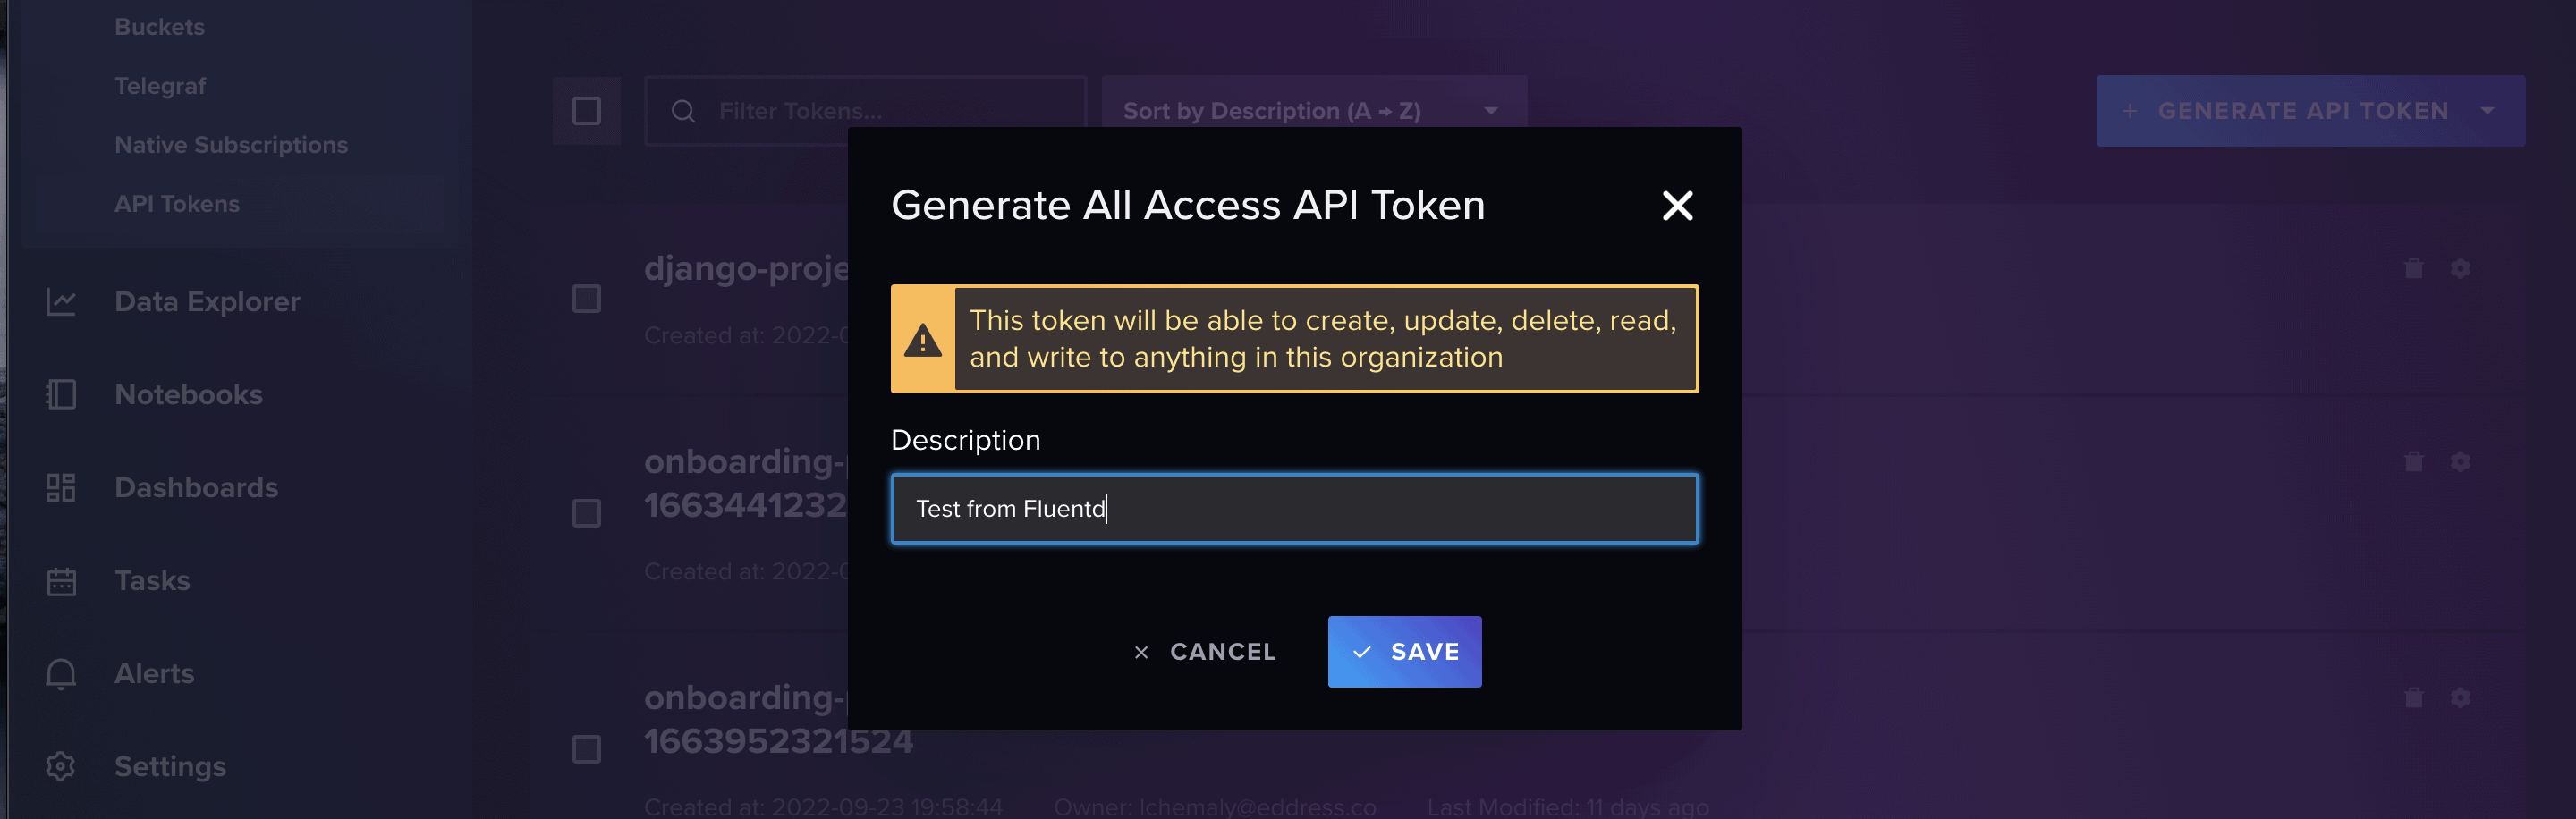 Screenshot showing Generate All Access API Token window